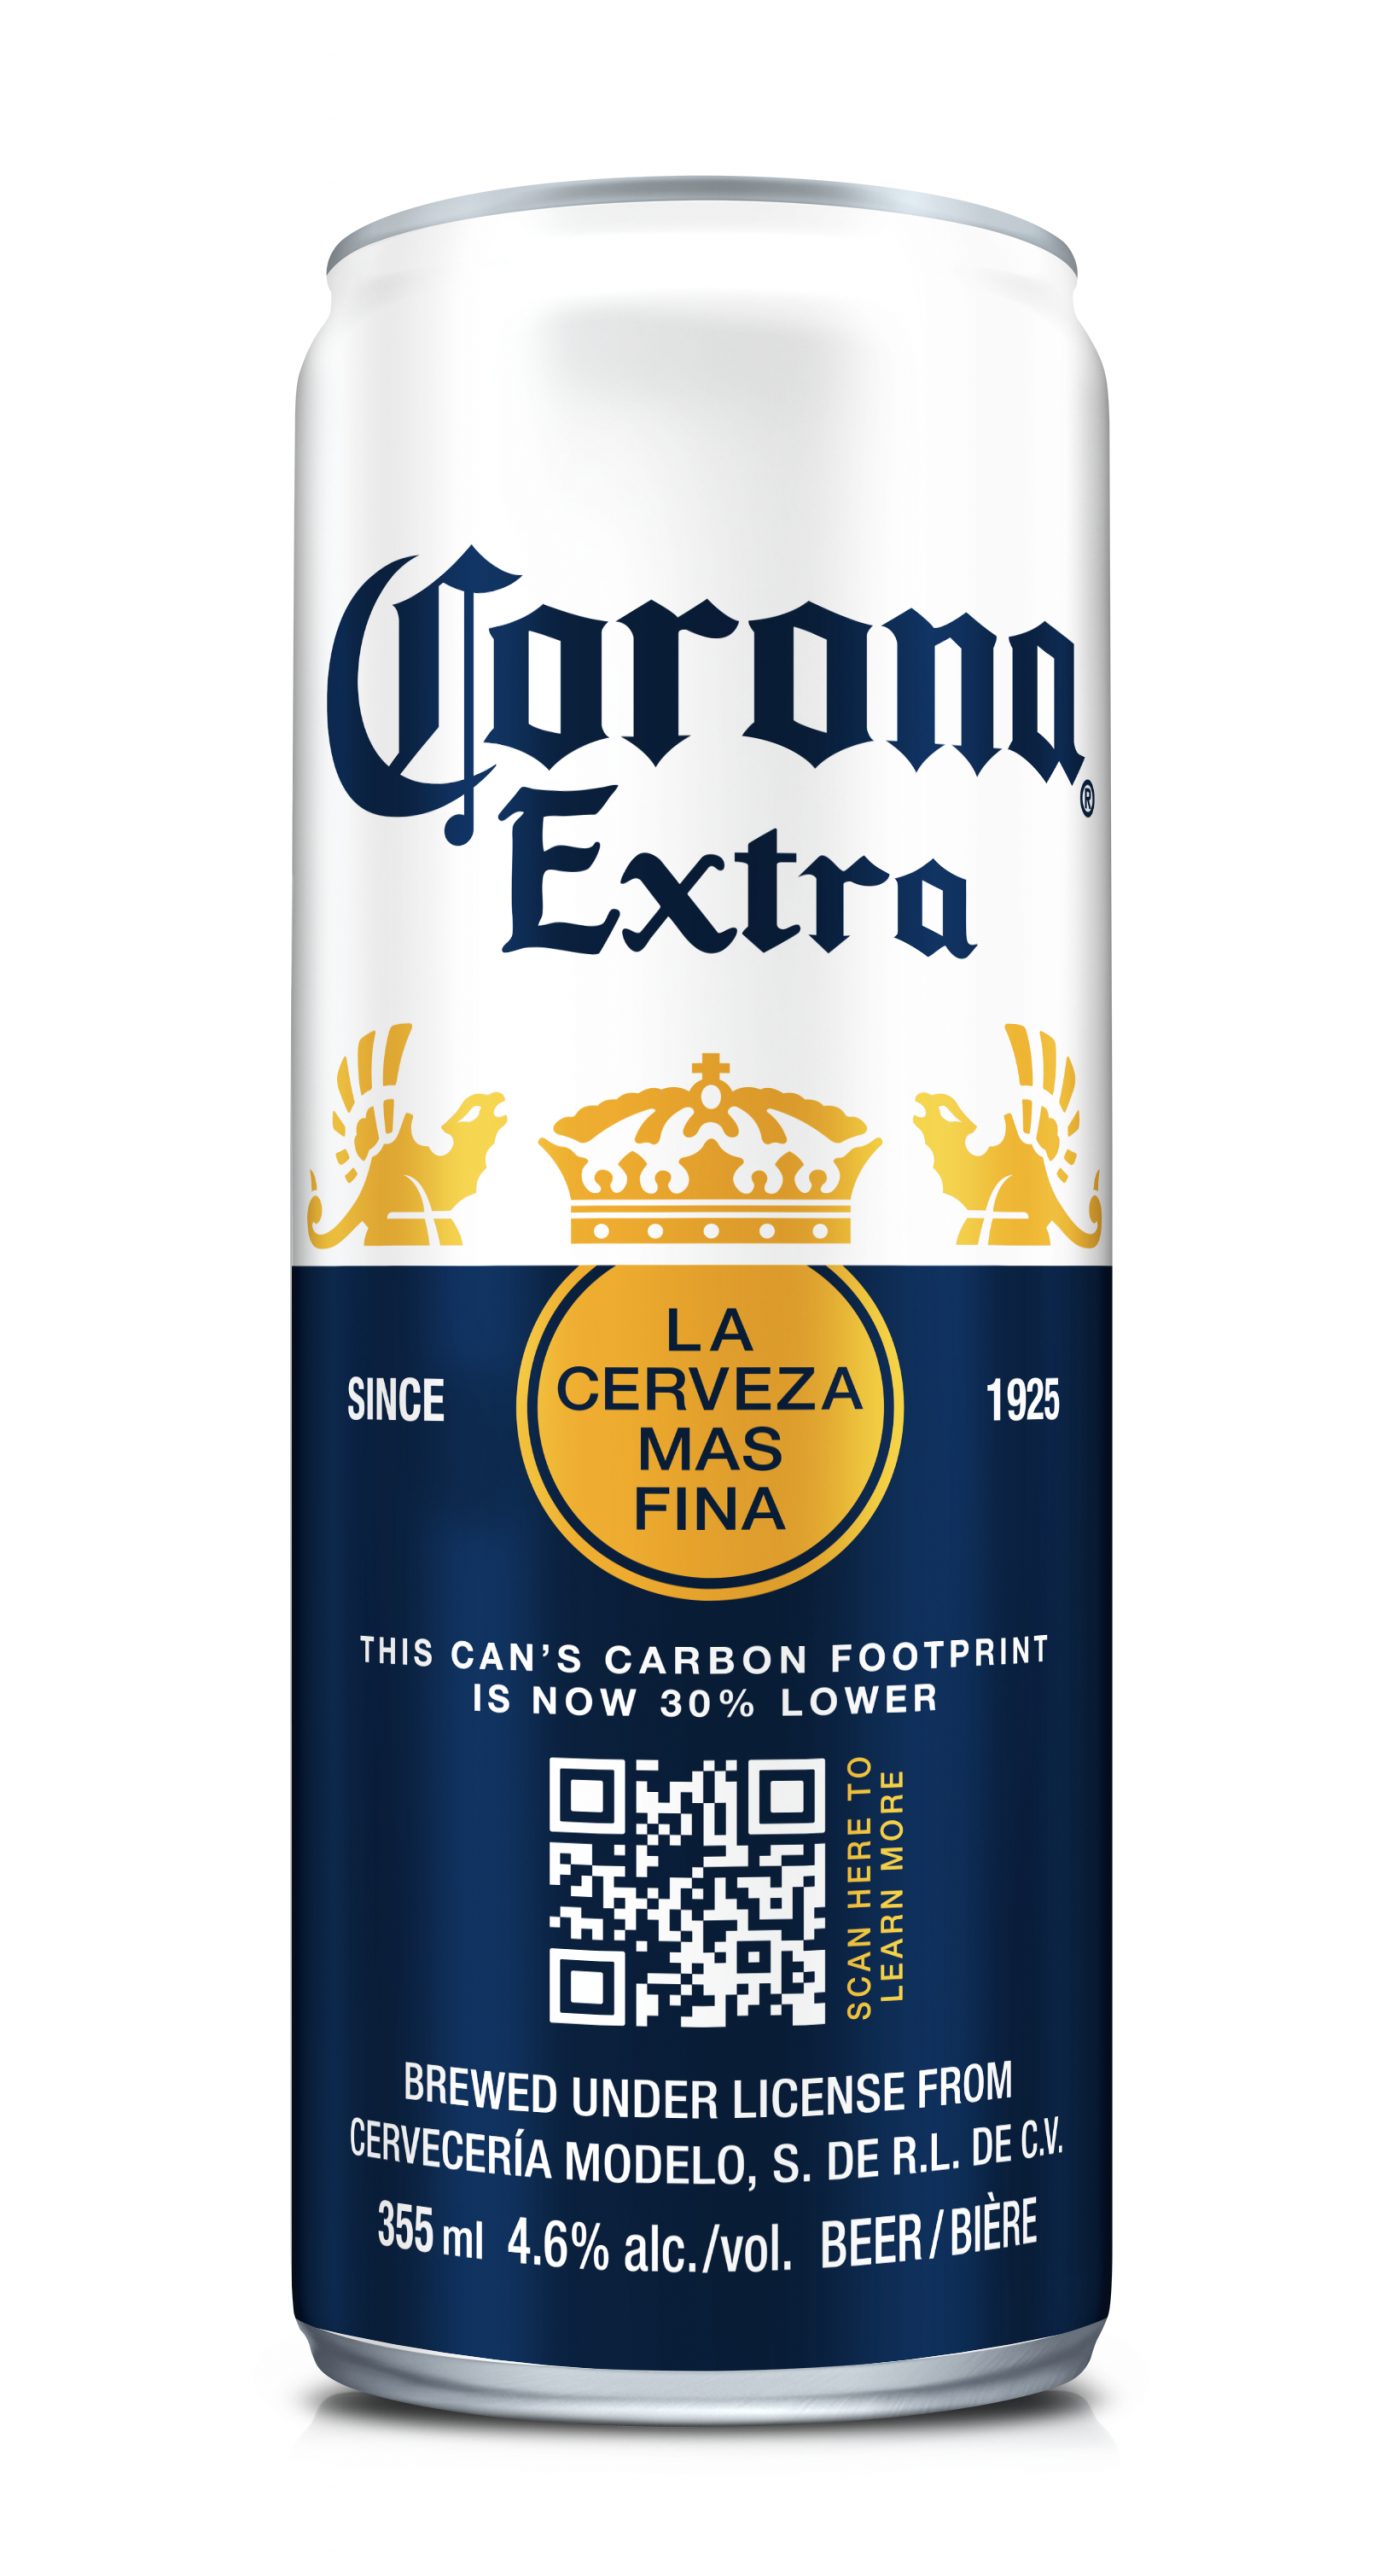 Rio Tinto, Corona pilot low carbon beverage can in Canada - Australian ...